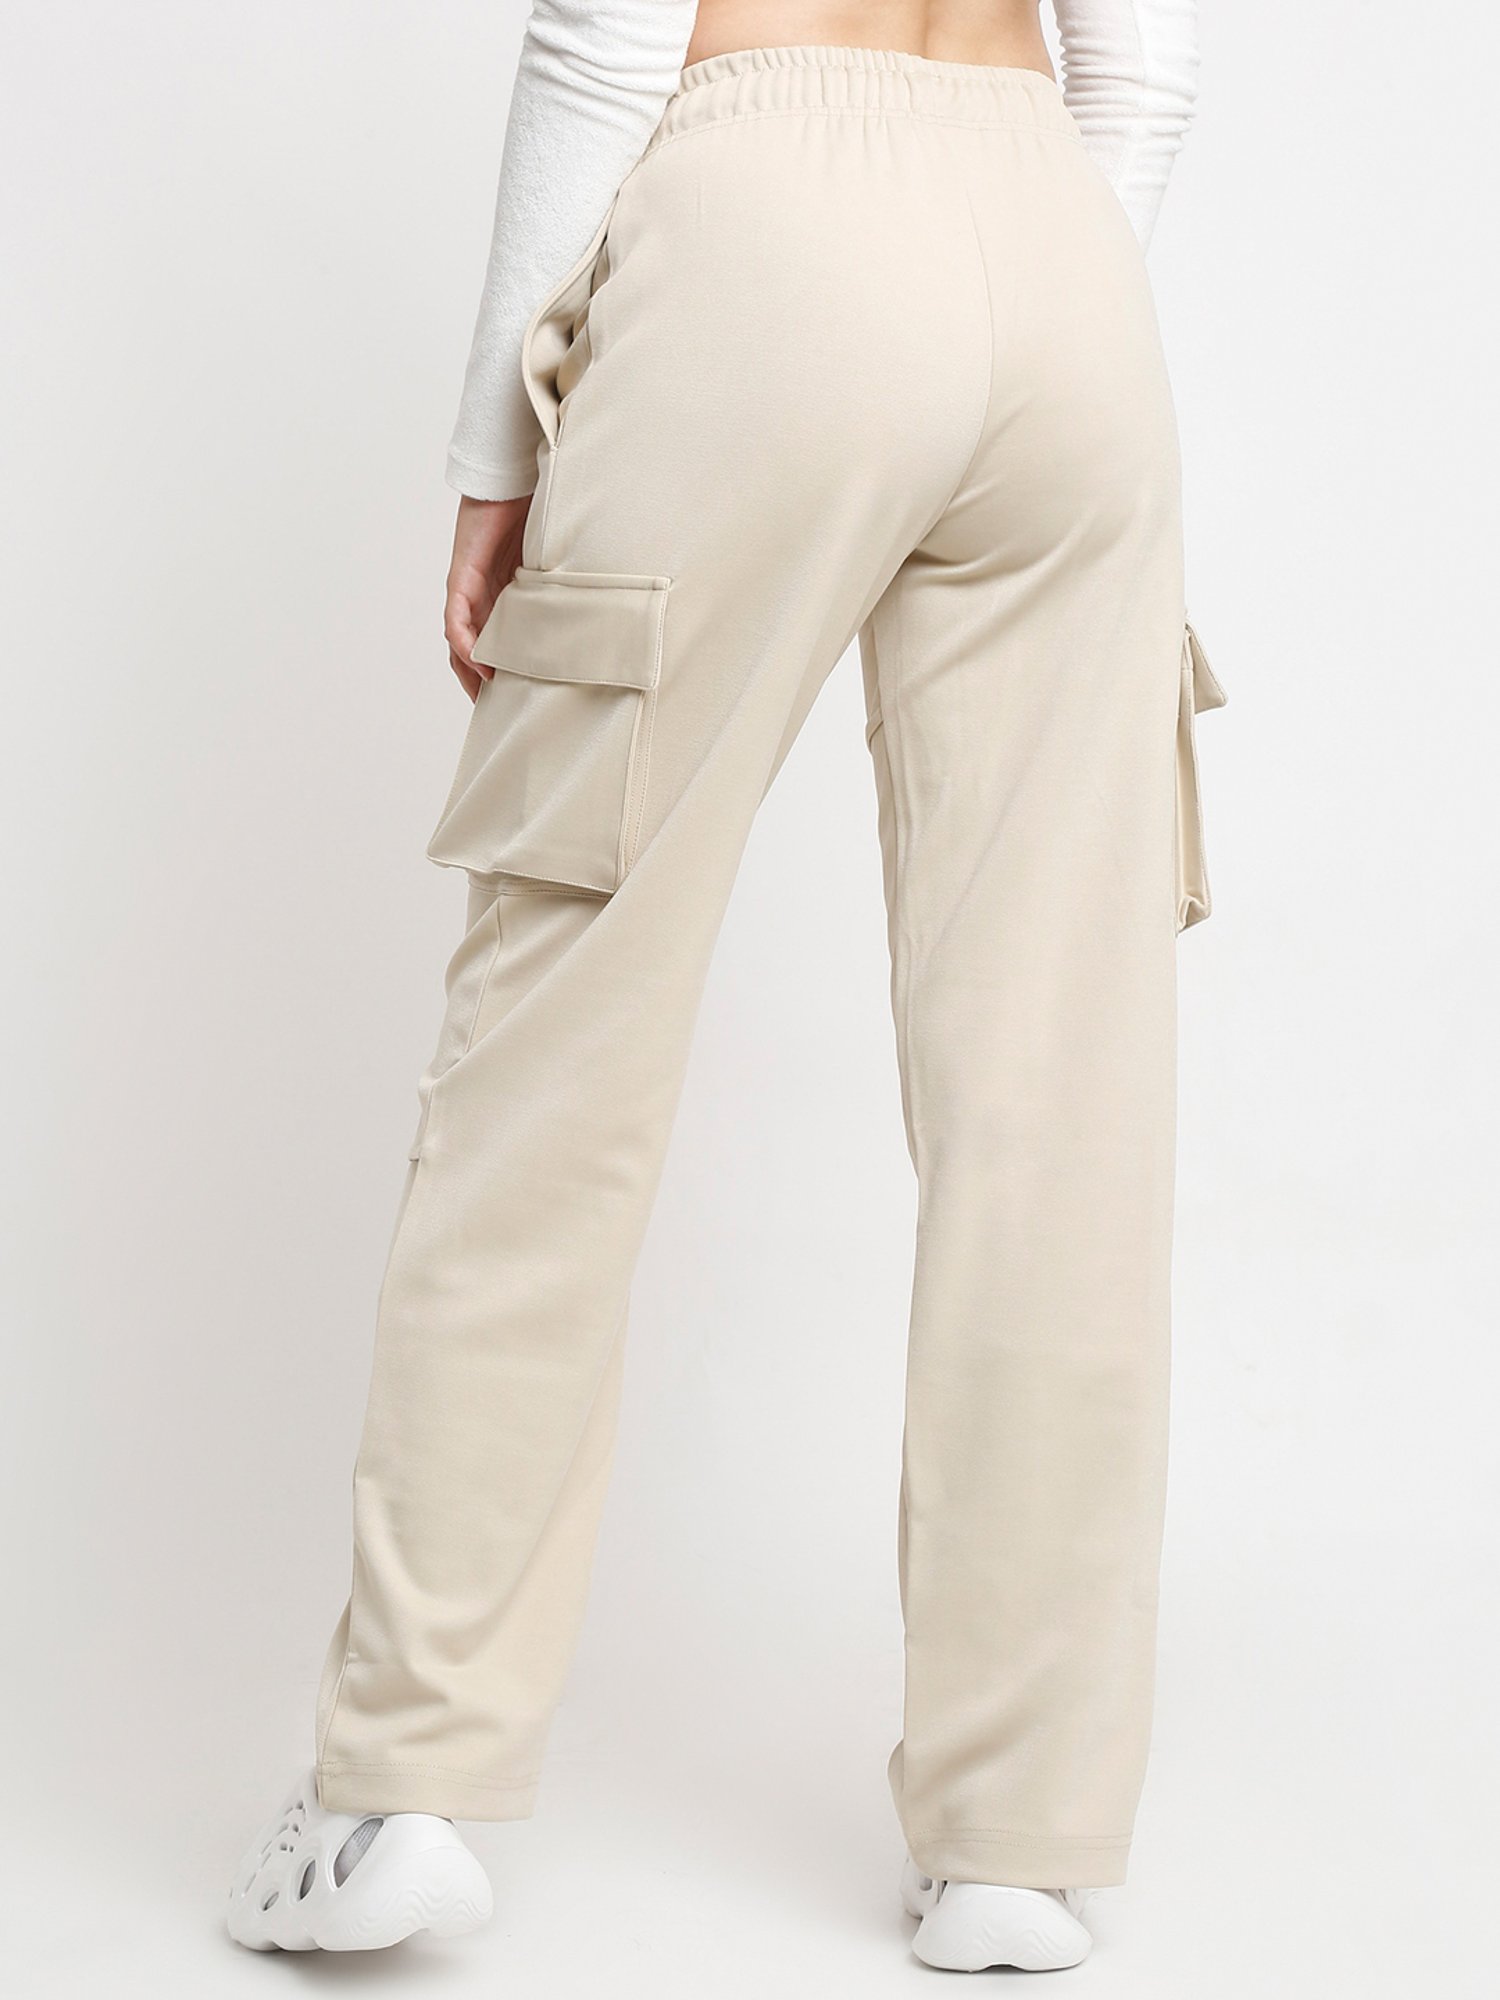 xinqinghao baggy cargo pants for women high waist pants with pockets wide  leg solid color long pants lounge pants women beige m - Walmart.com